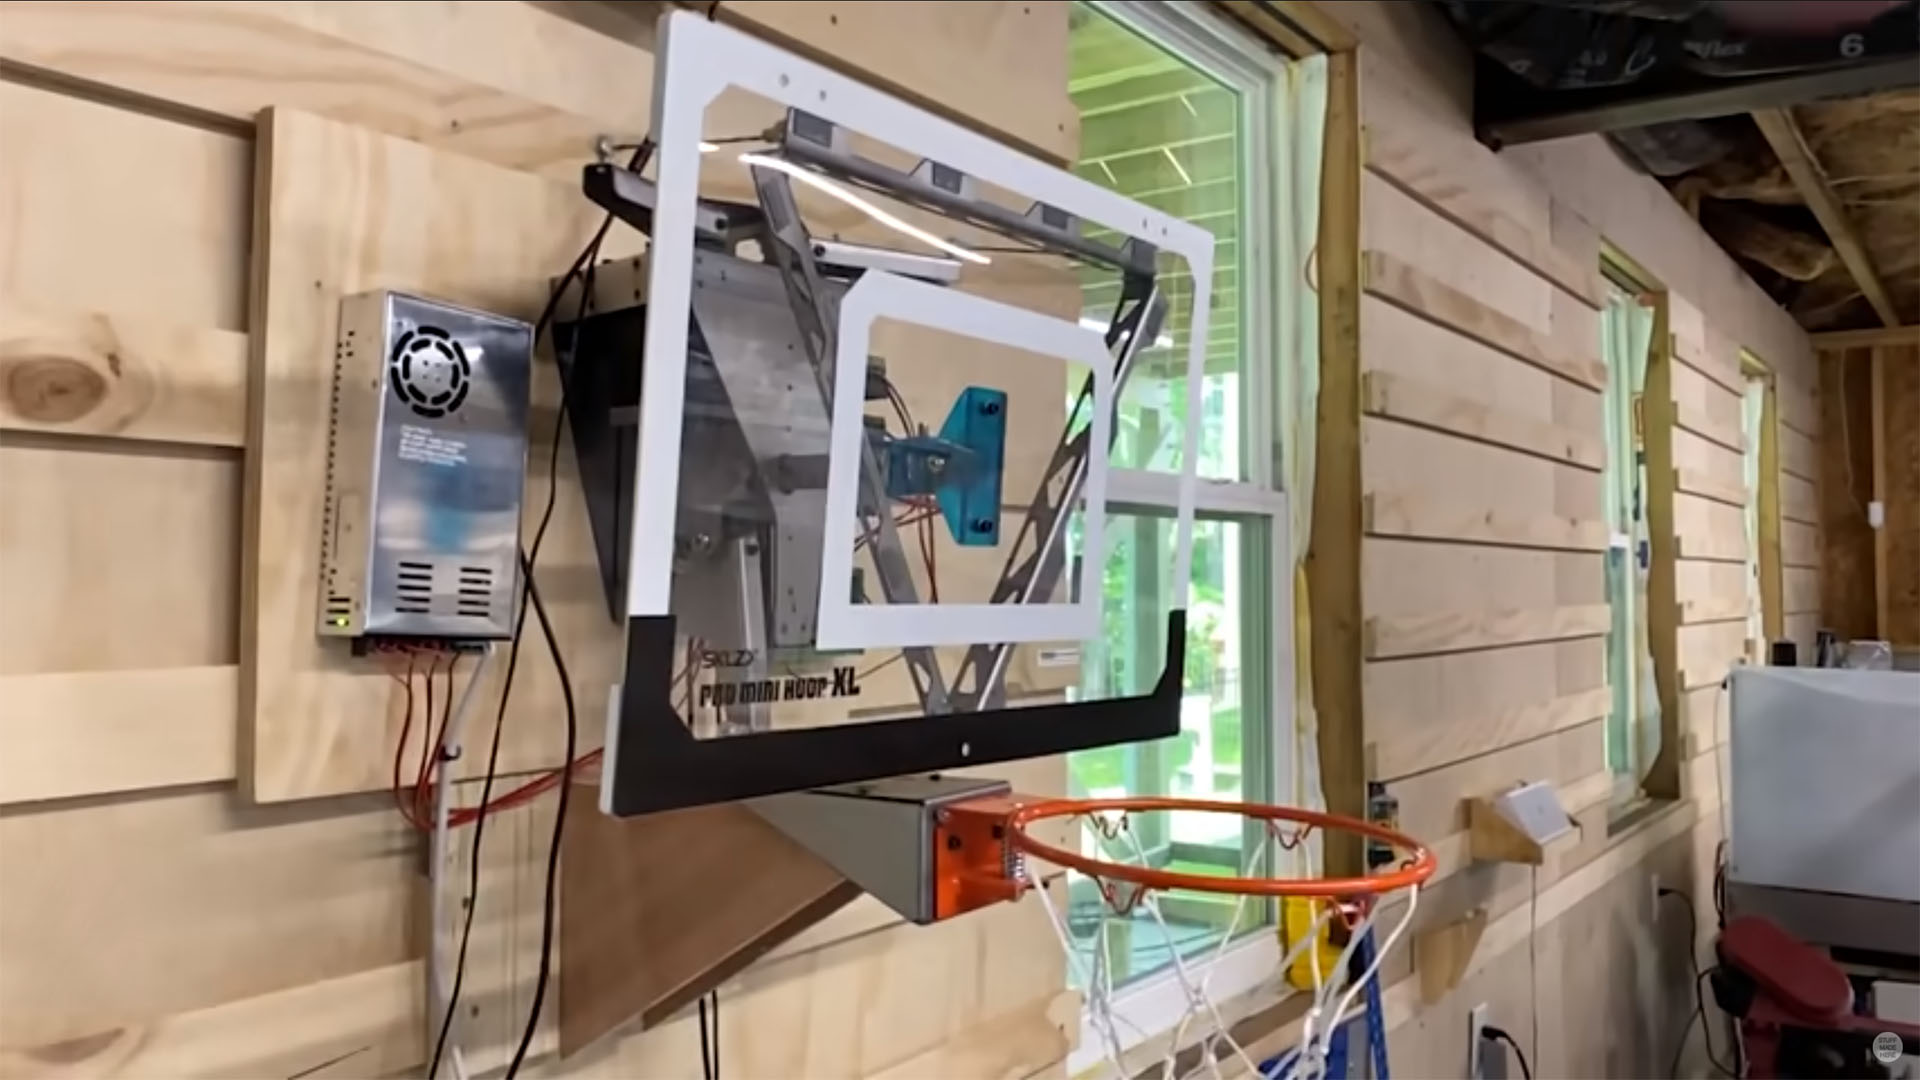 This robotic basketball hoop turns bricks into buckets